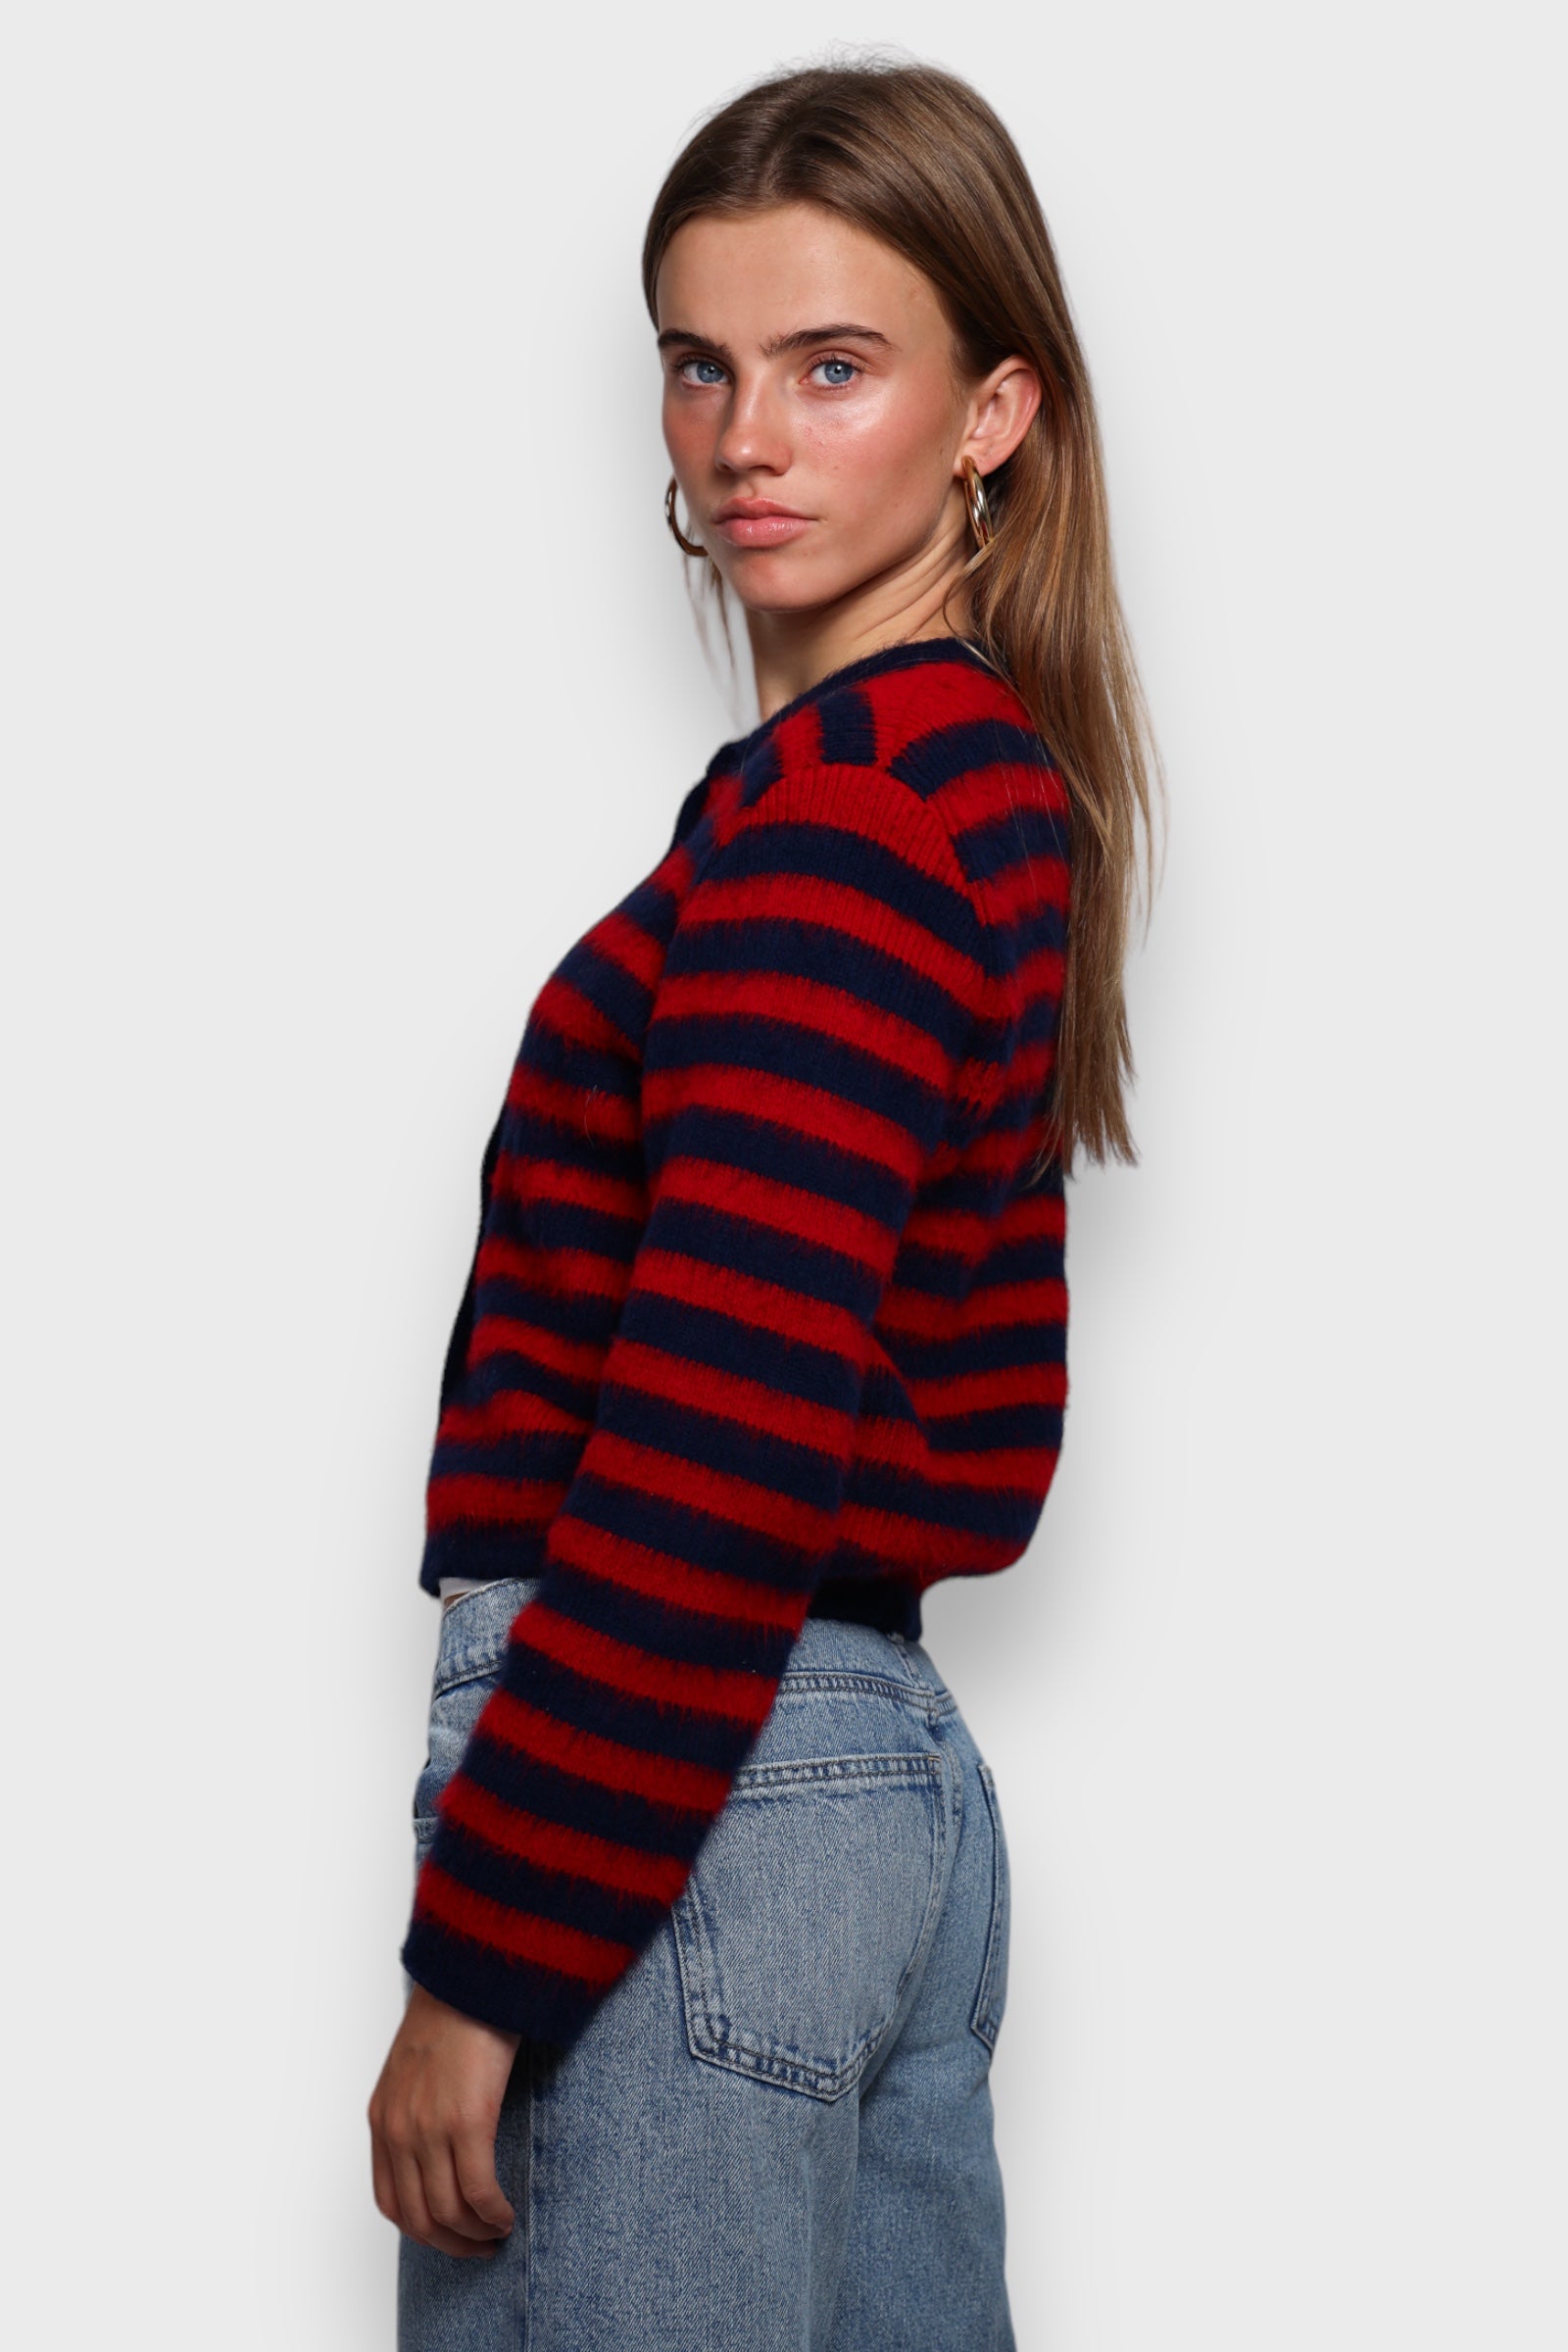 "Chloé" cardigan striped red